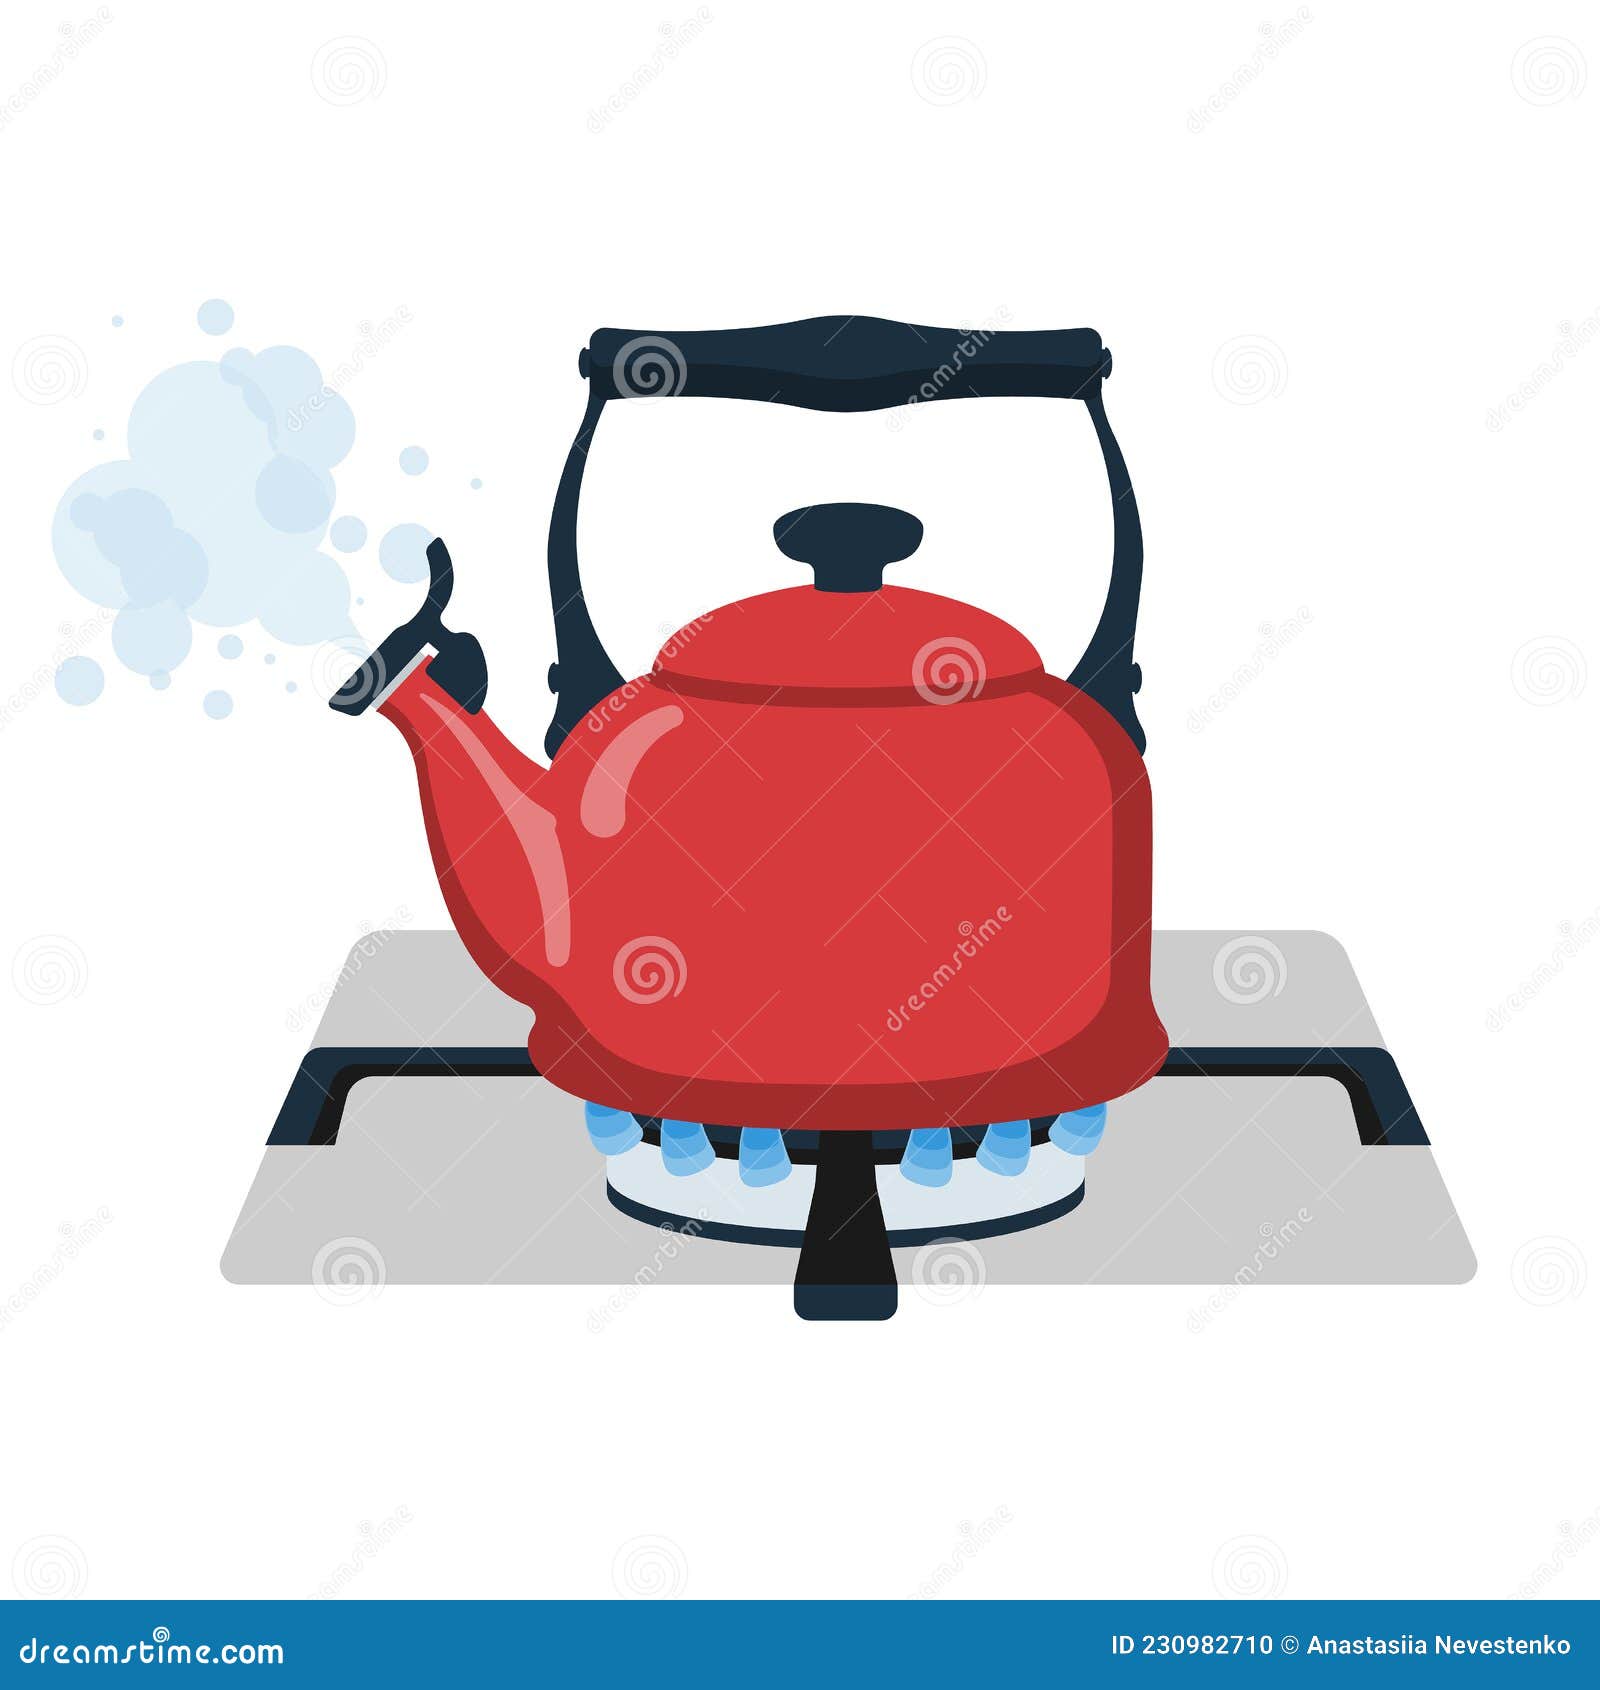 https://thumbs.dreamstime.com/z/boiling-kettle-boiling-water-kettle-gas-flame-vector-boiling-kettle-boiling-water-kettle-gas-flame-evaporating-water-230982710.jpg